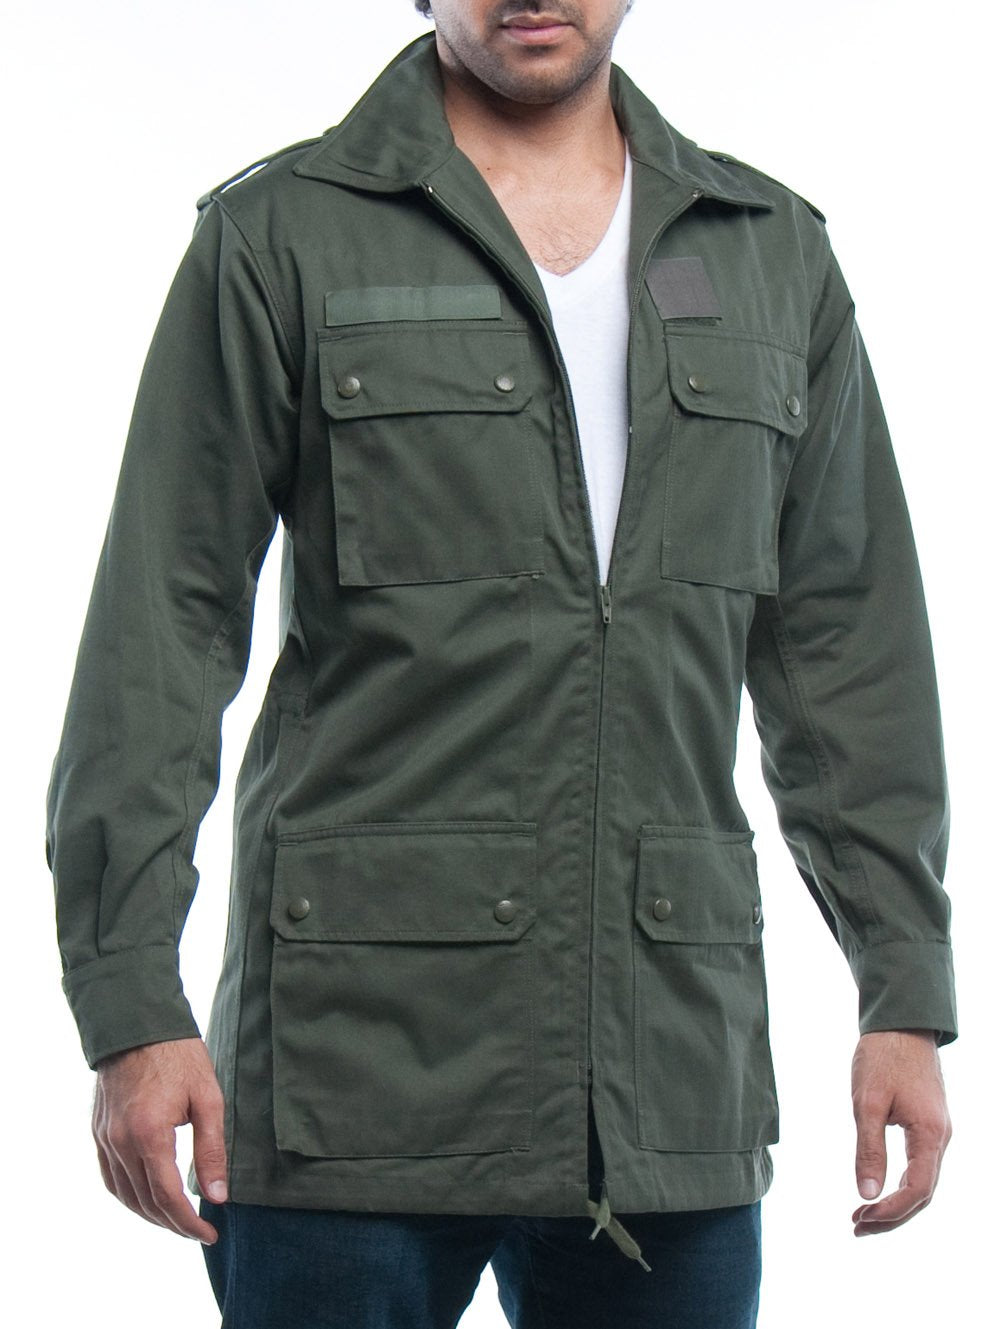 Army Green Four Pocket Jacket Ver. 2 – Top Rank Vintage